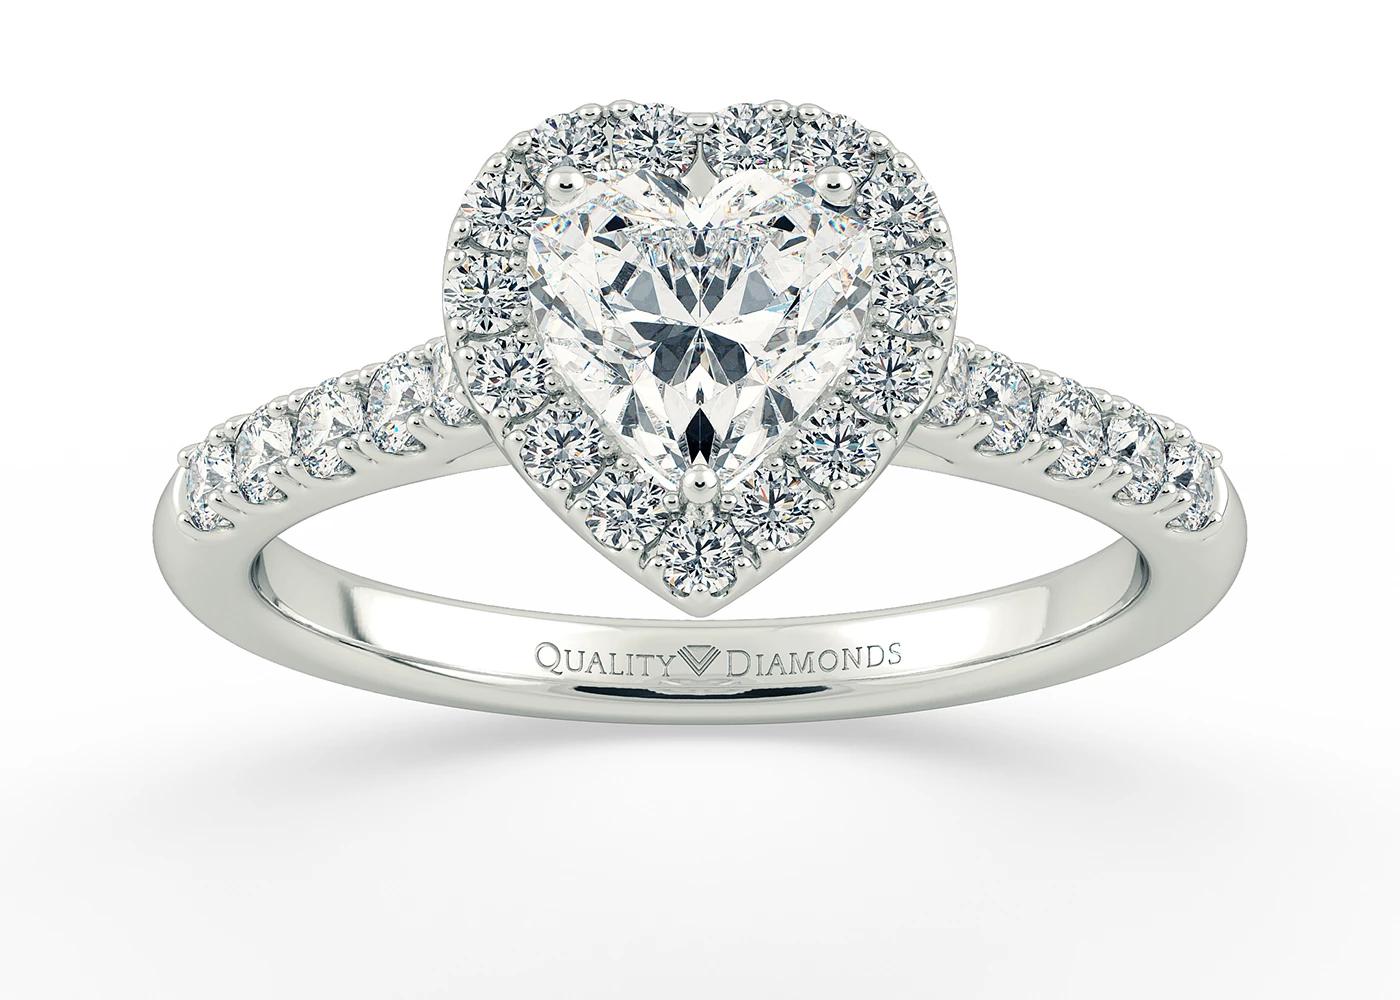 One Carat Heart Halo Diamond Ring in Platinum 950